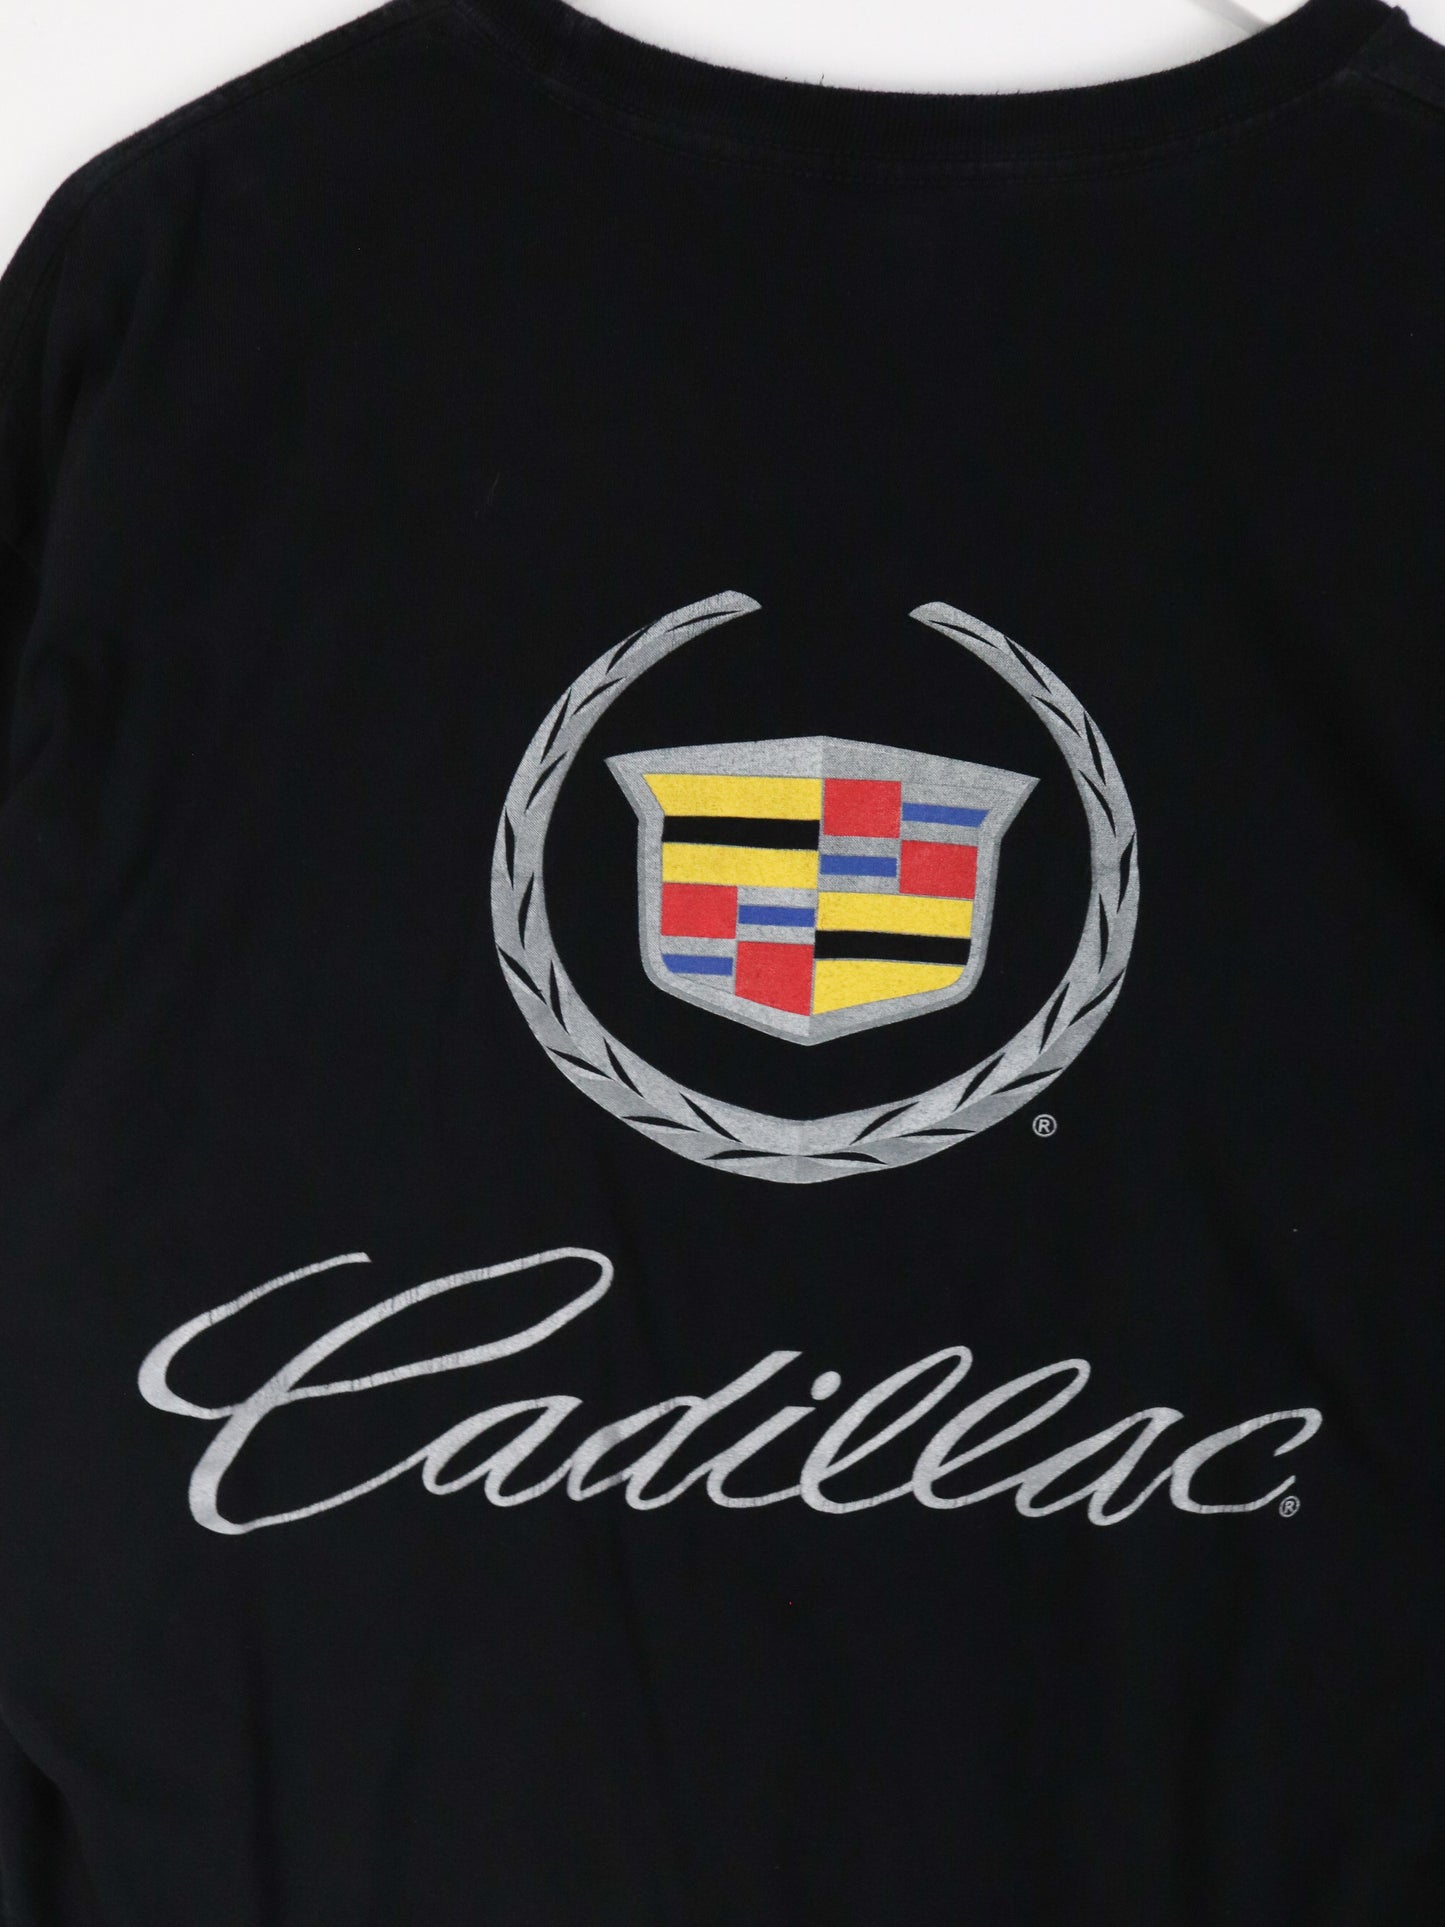 Cadillac T Shirt Mens XL Black Car Promo